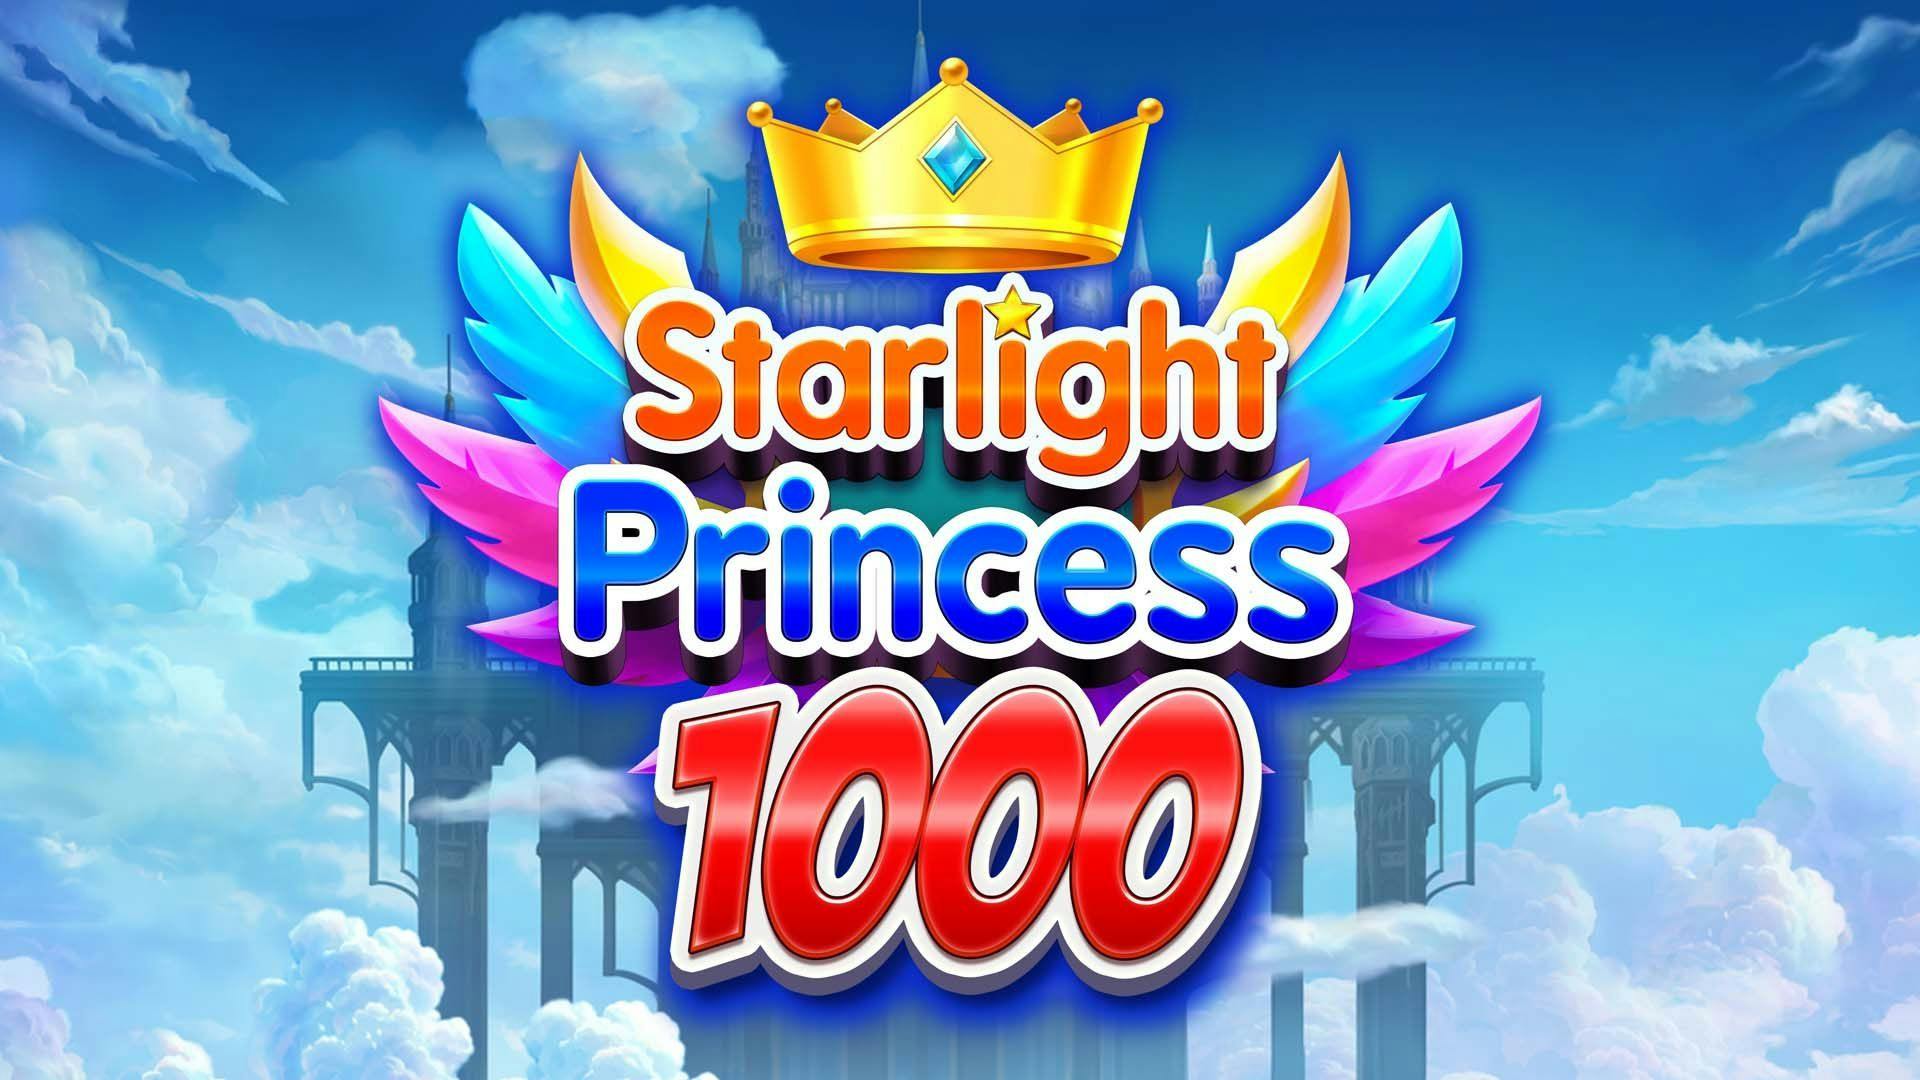 Starlight Princess 1000 Slot Machine Online Free Game Play